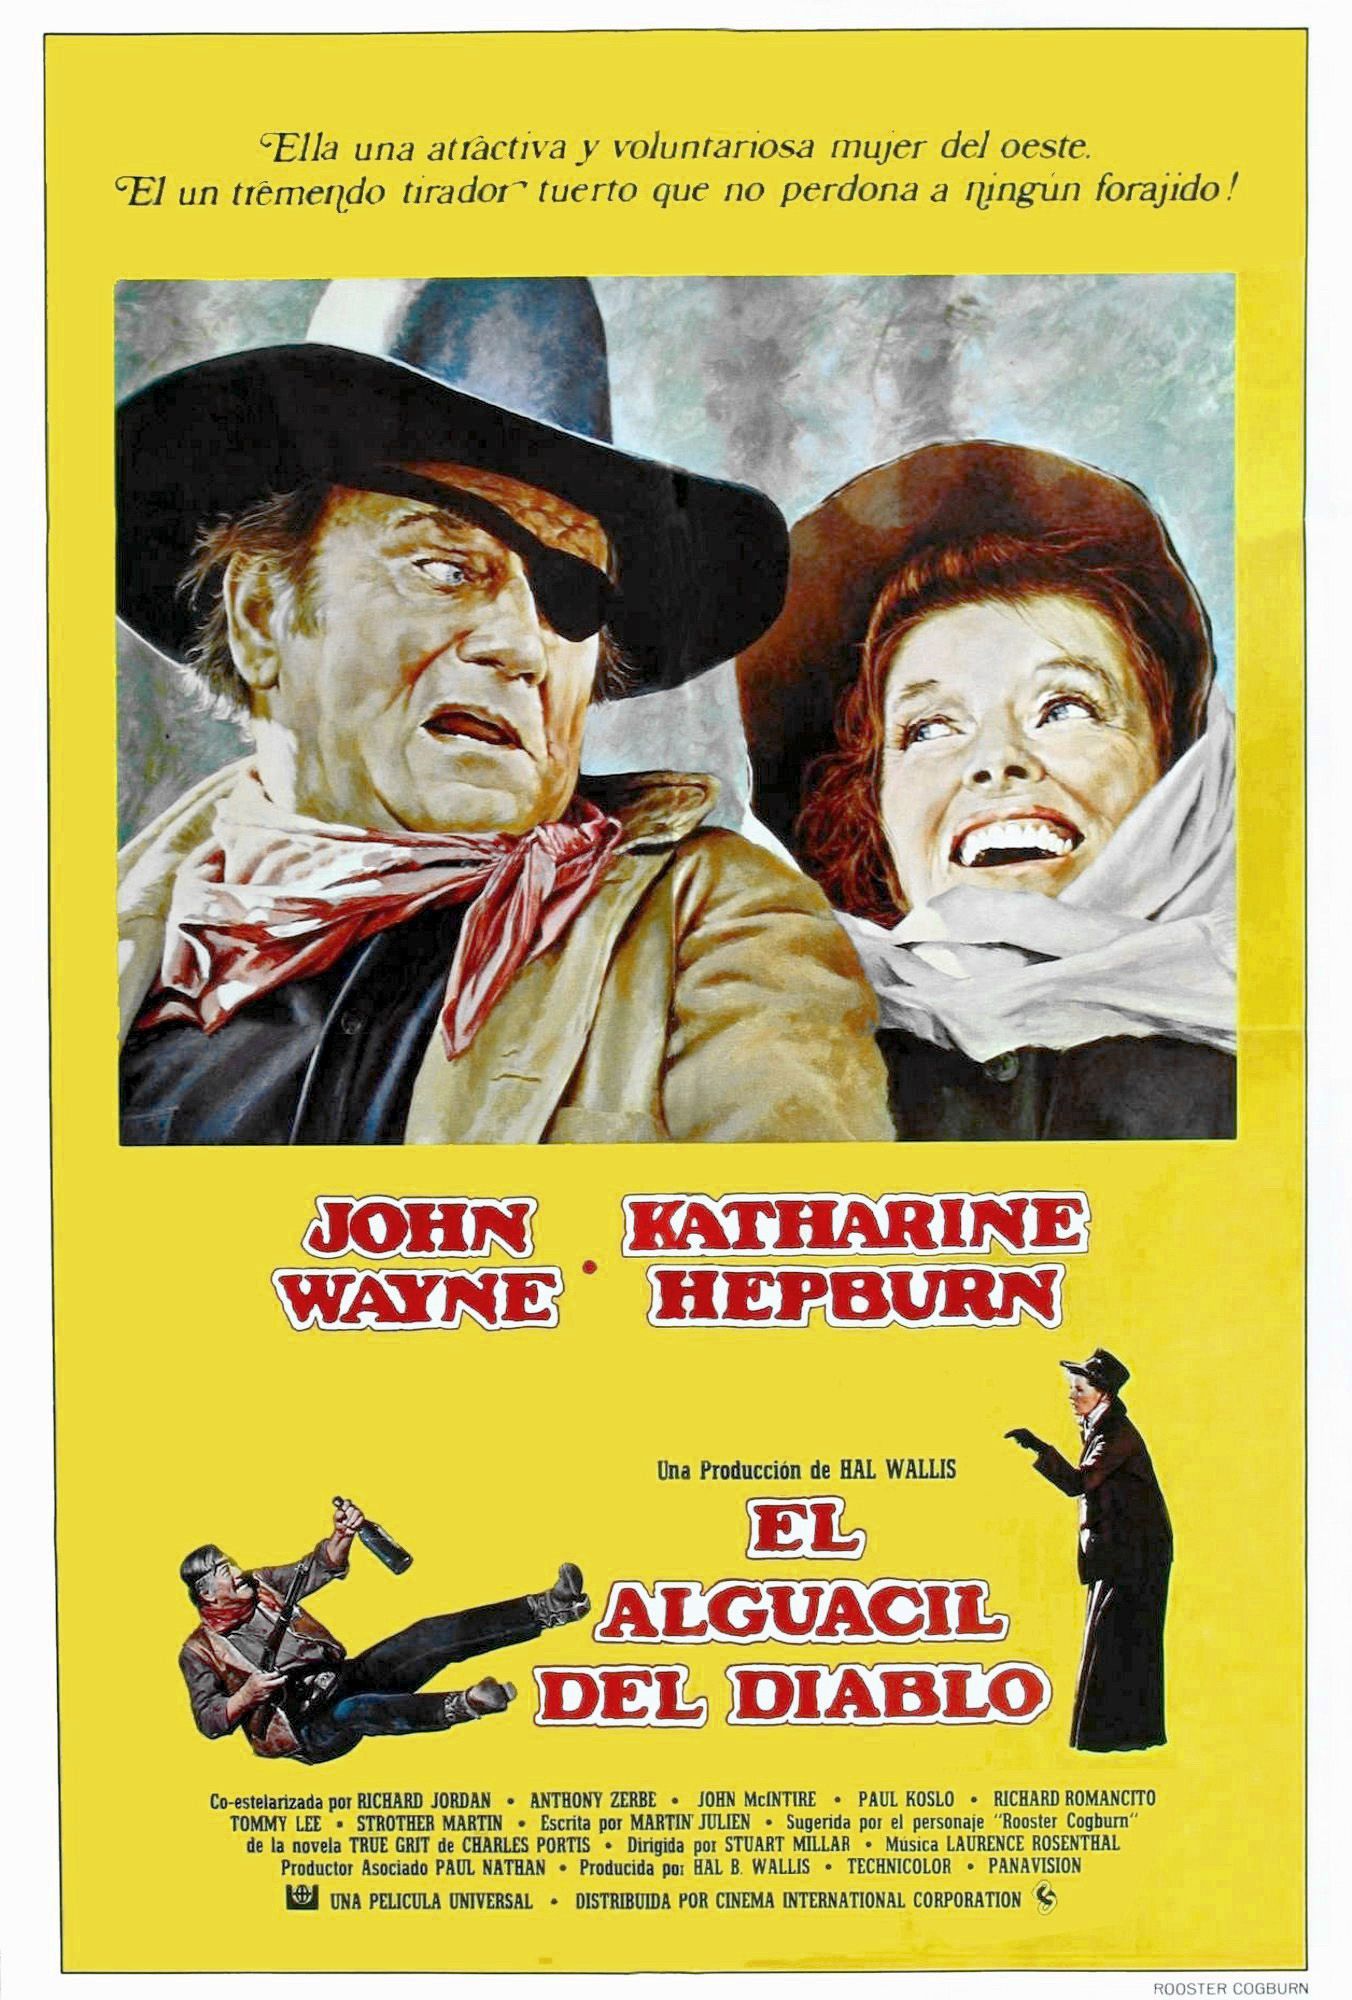 Rooster Cogburn Film Poster